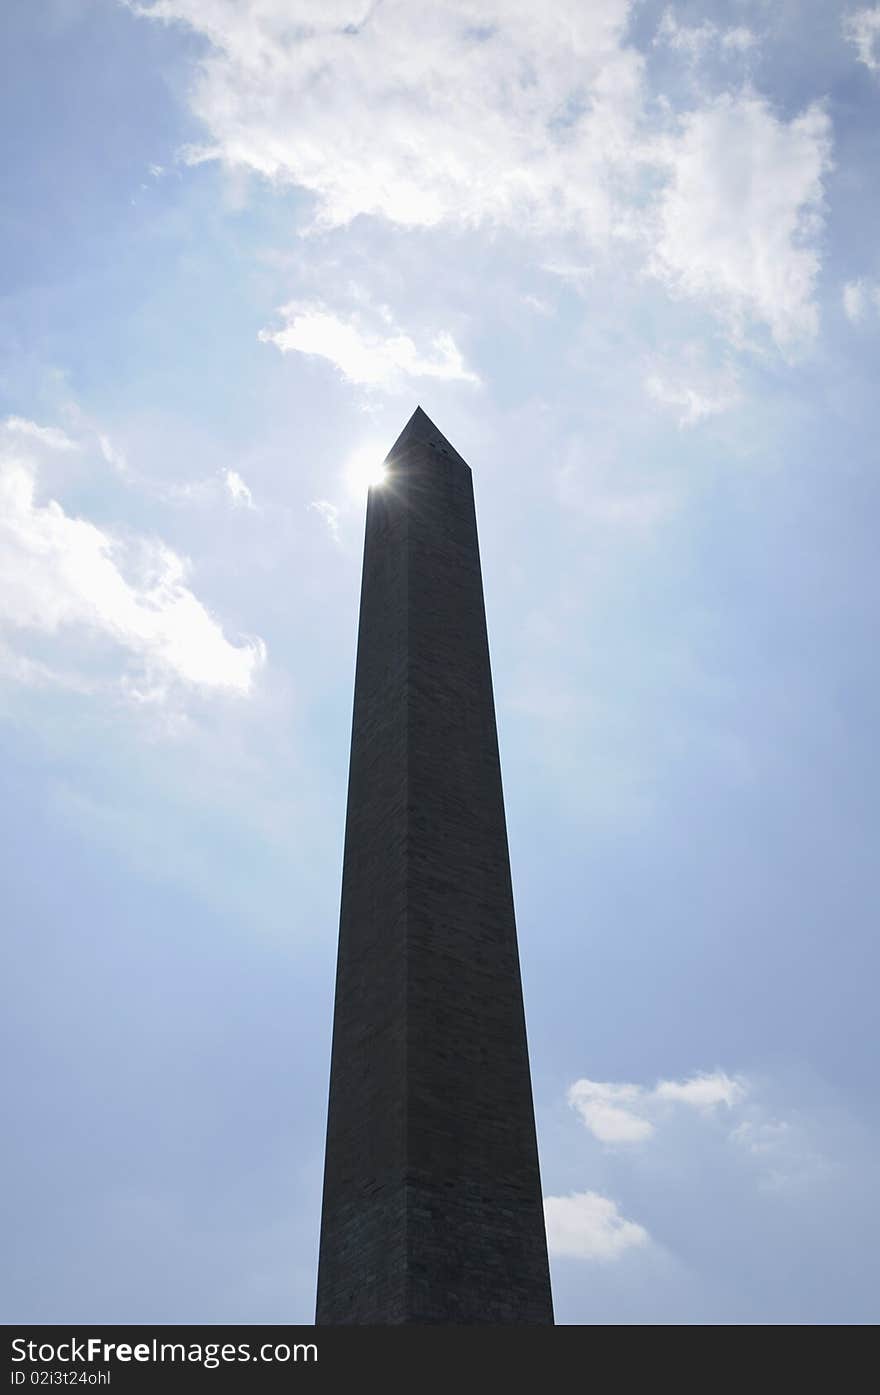 Washington monument in Washington DC against blue sky with flare